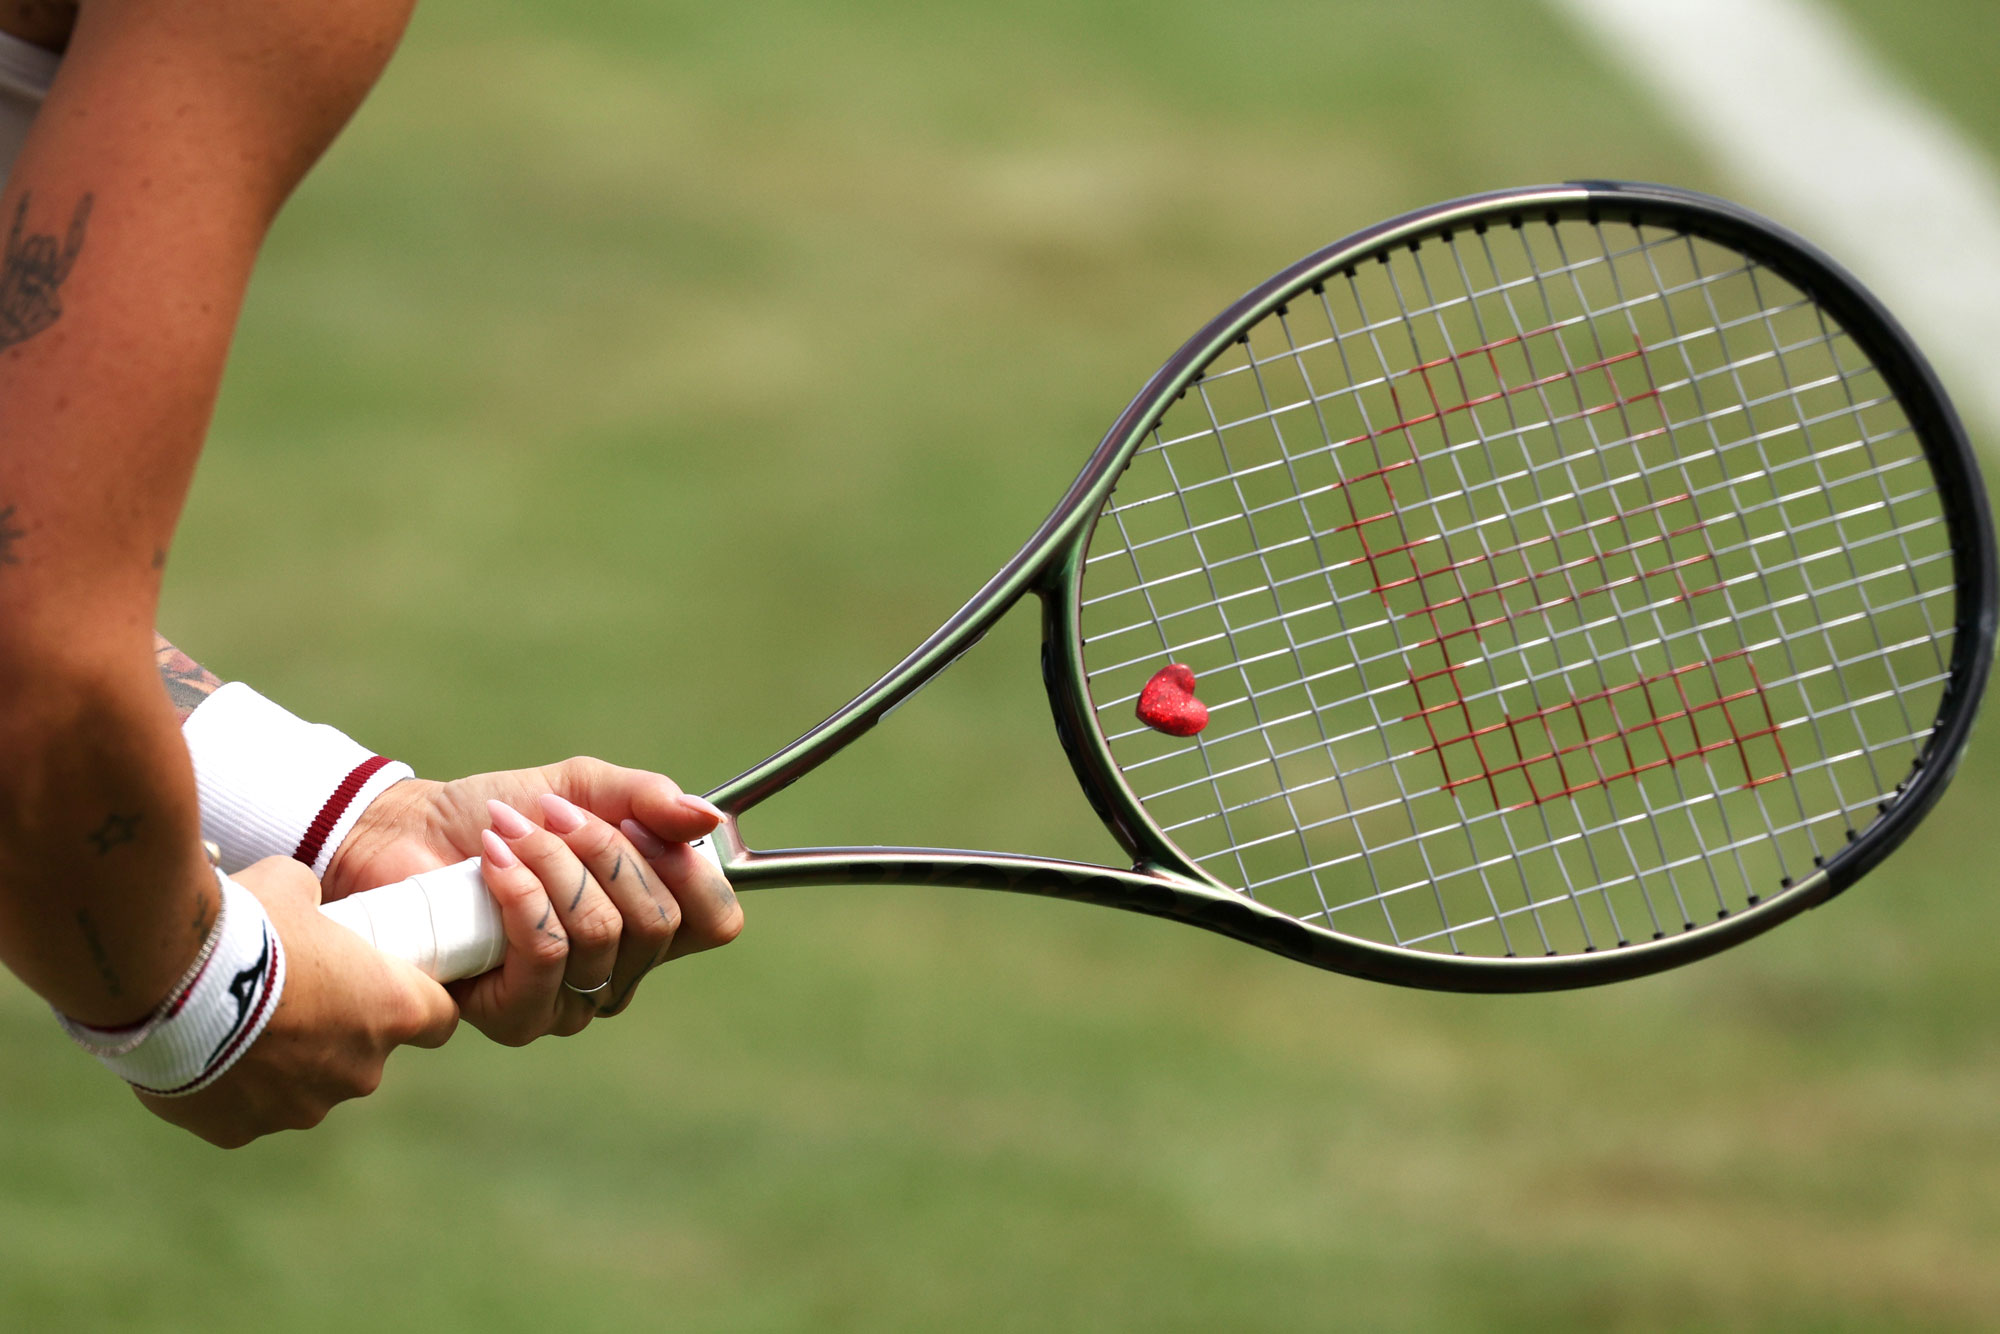 Wilson Tennis Racket Maker Amer Sports Files for US IPO - Bloomberg